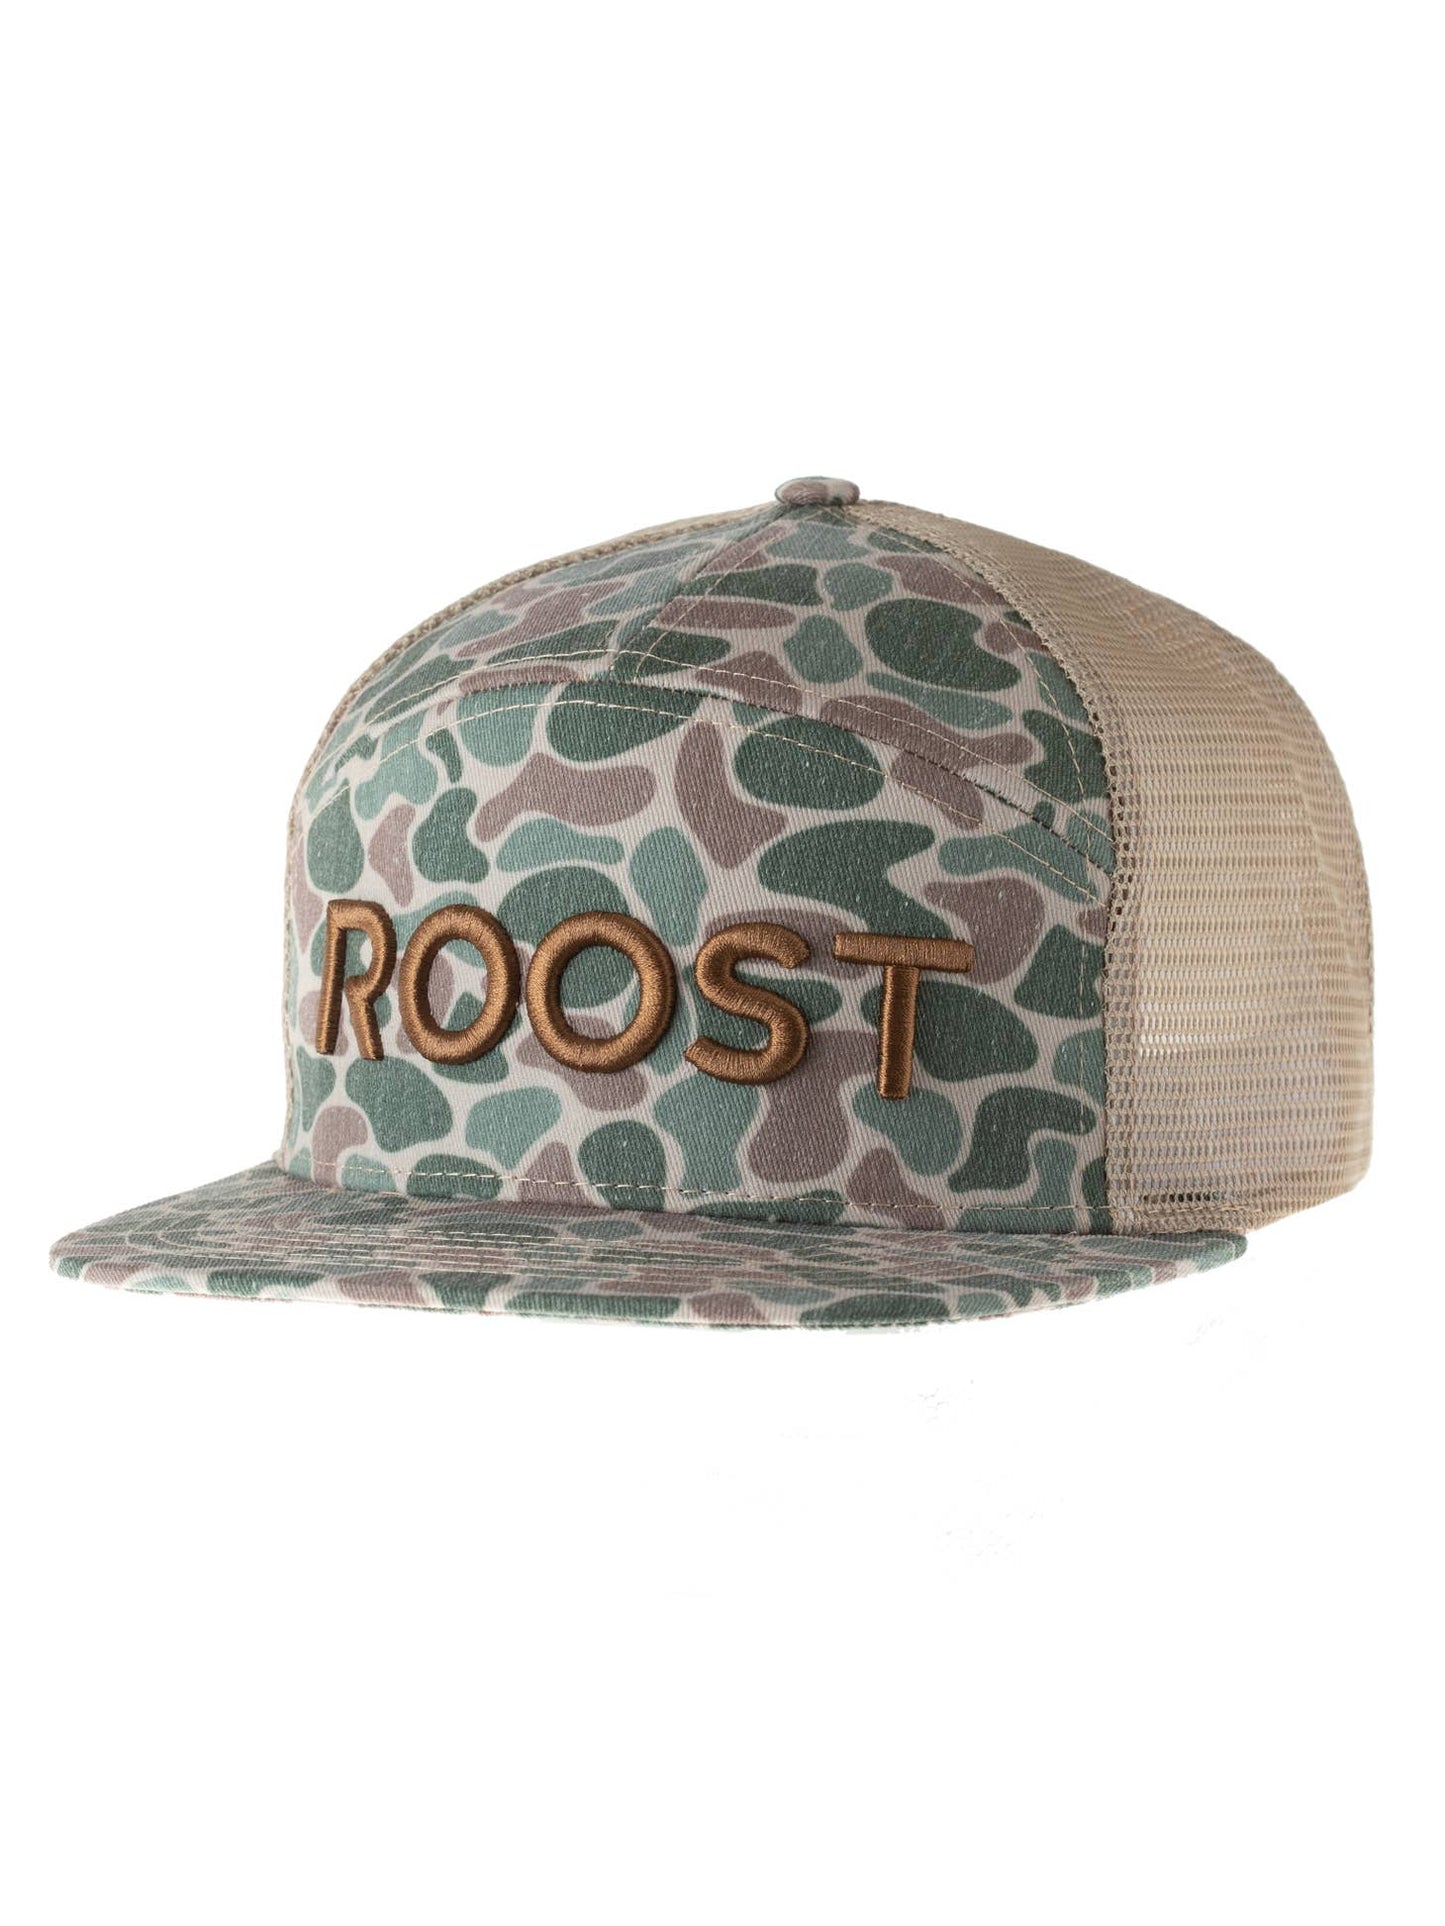 Roost Camo 7 Panel Logo Hat